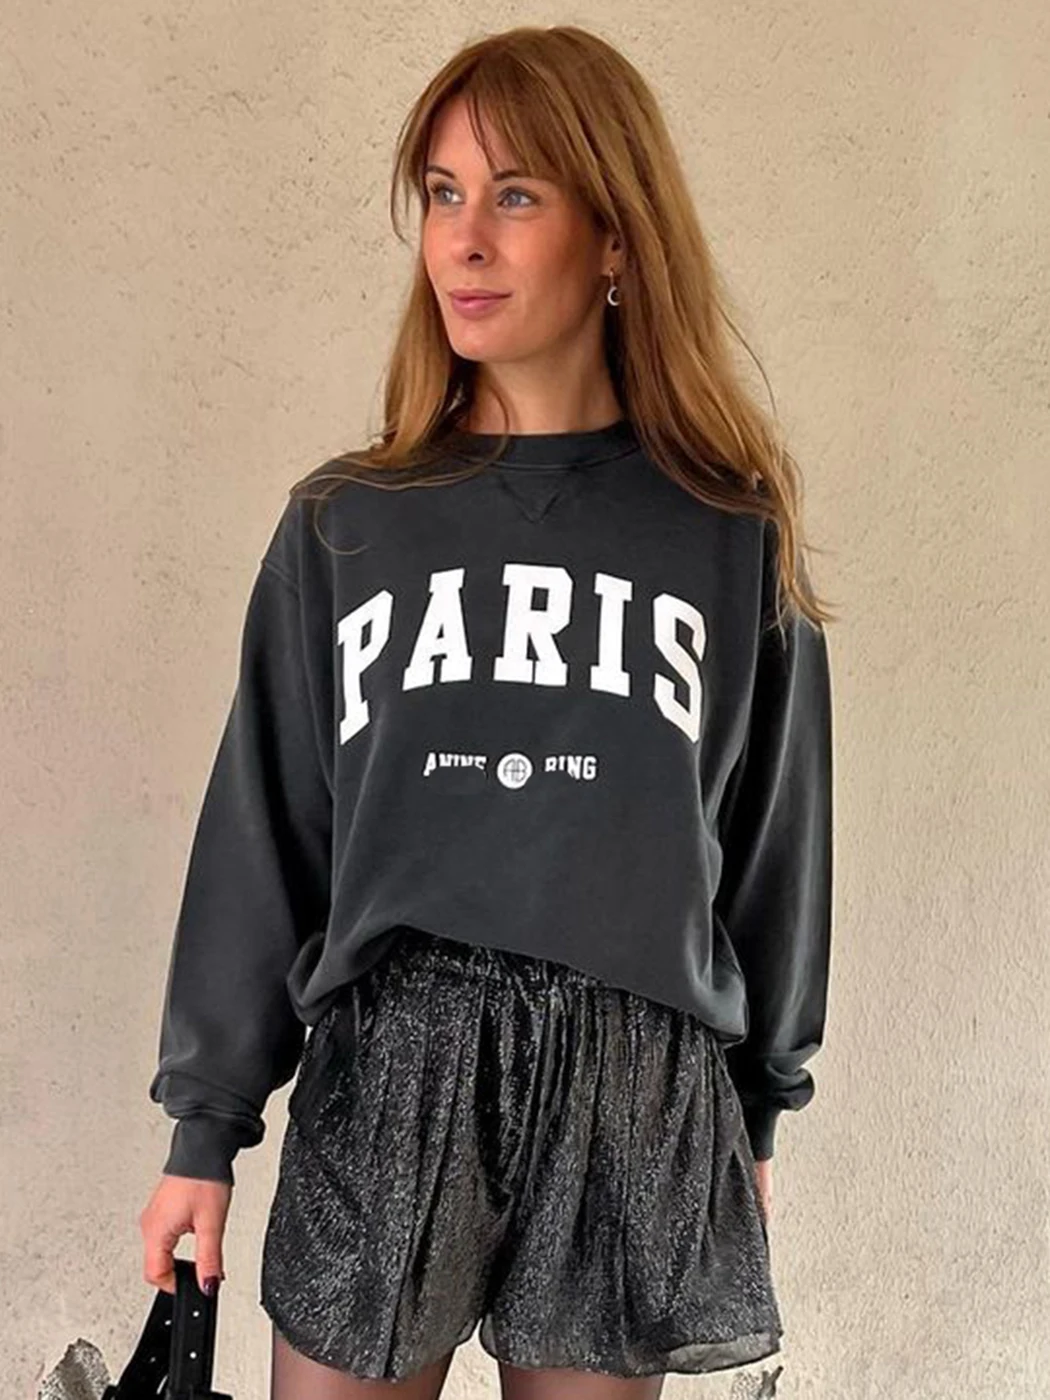 

PARIS Washed Faded Sweatshirt Women Autumn Winter Vintage Hoodies Fashion Sweatshirts Tops 2021 Femme Oversize Pullover